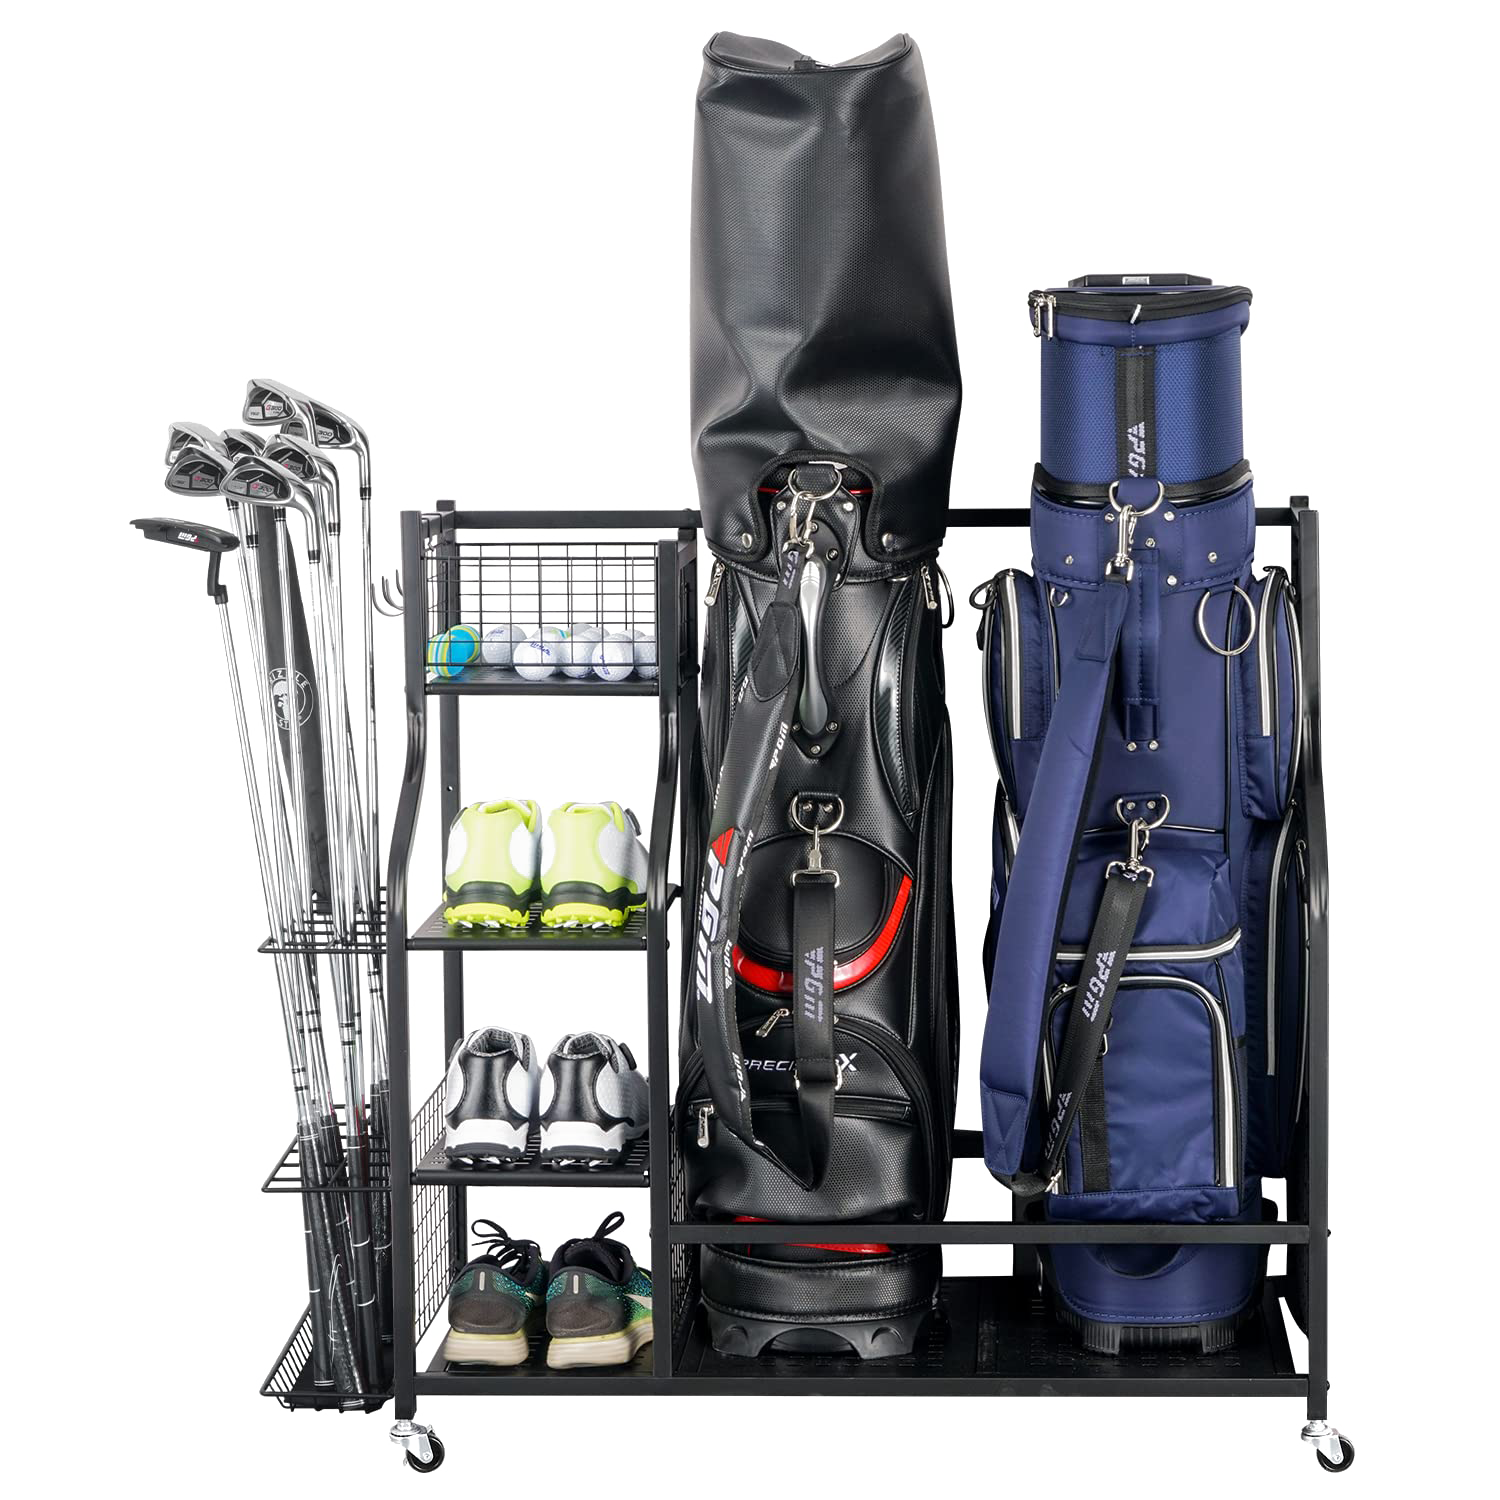 Mythinglogic Golf Bag Organizer, Extra Large Design for Golf Accessories